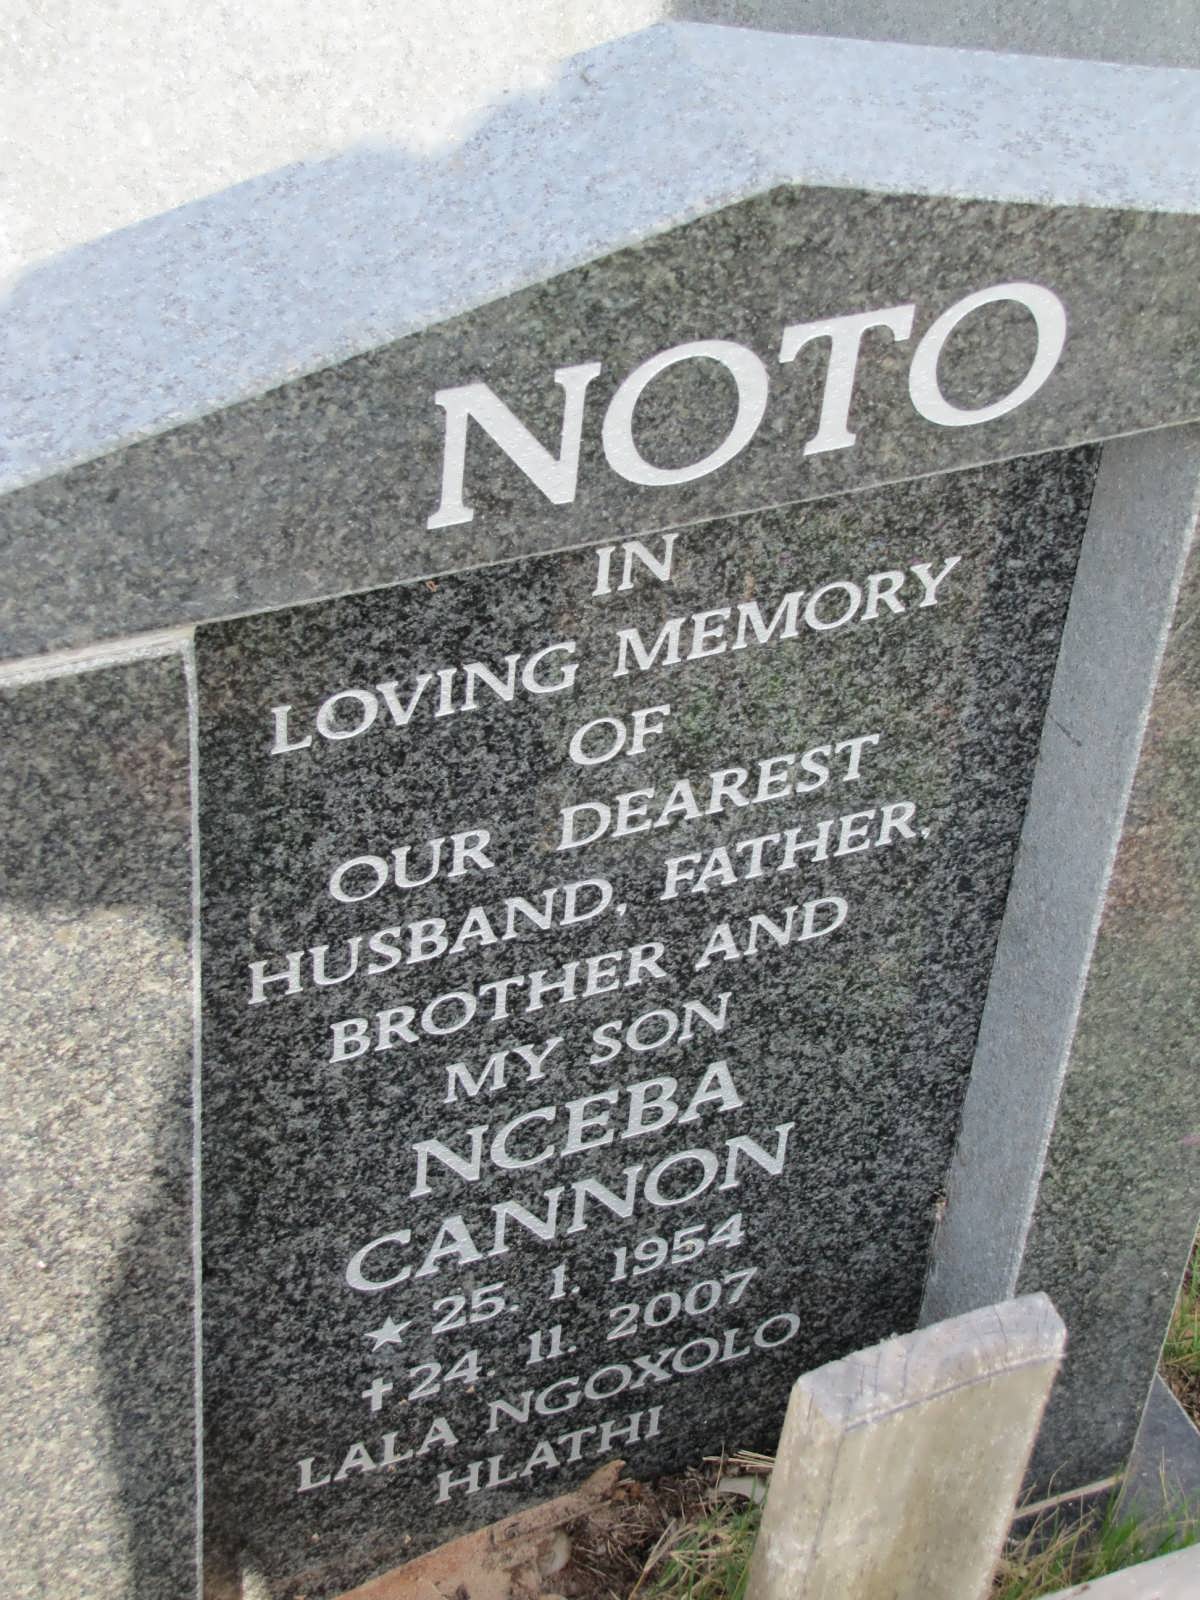 NOTO Nceba Cannon 1954-2007